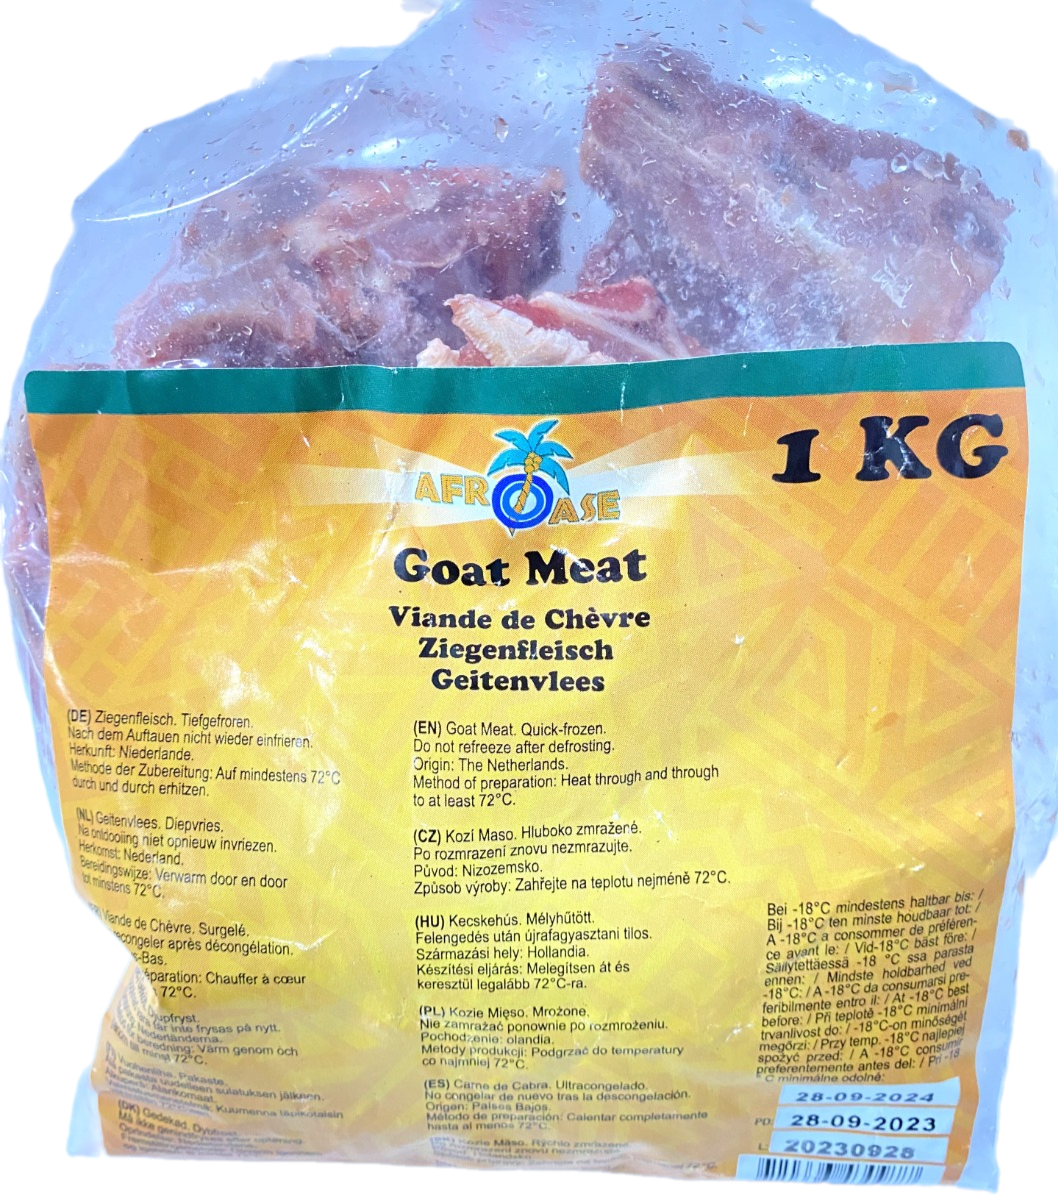 Afro Ase Goat Meat 1kg